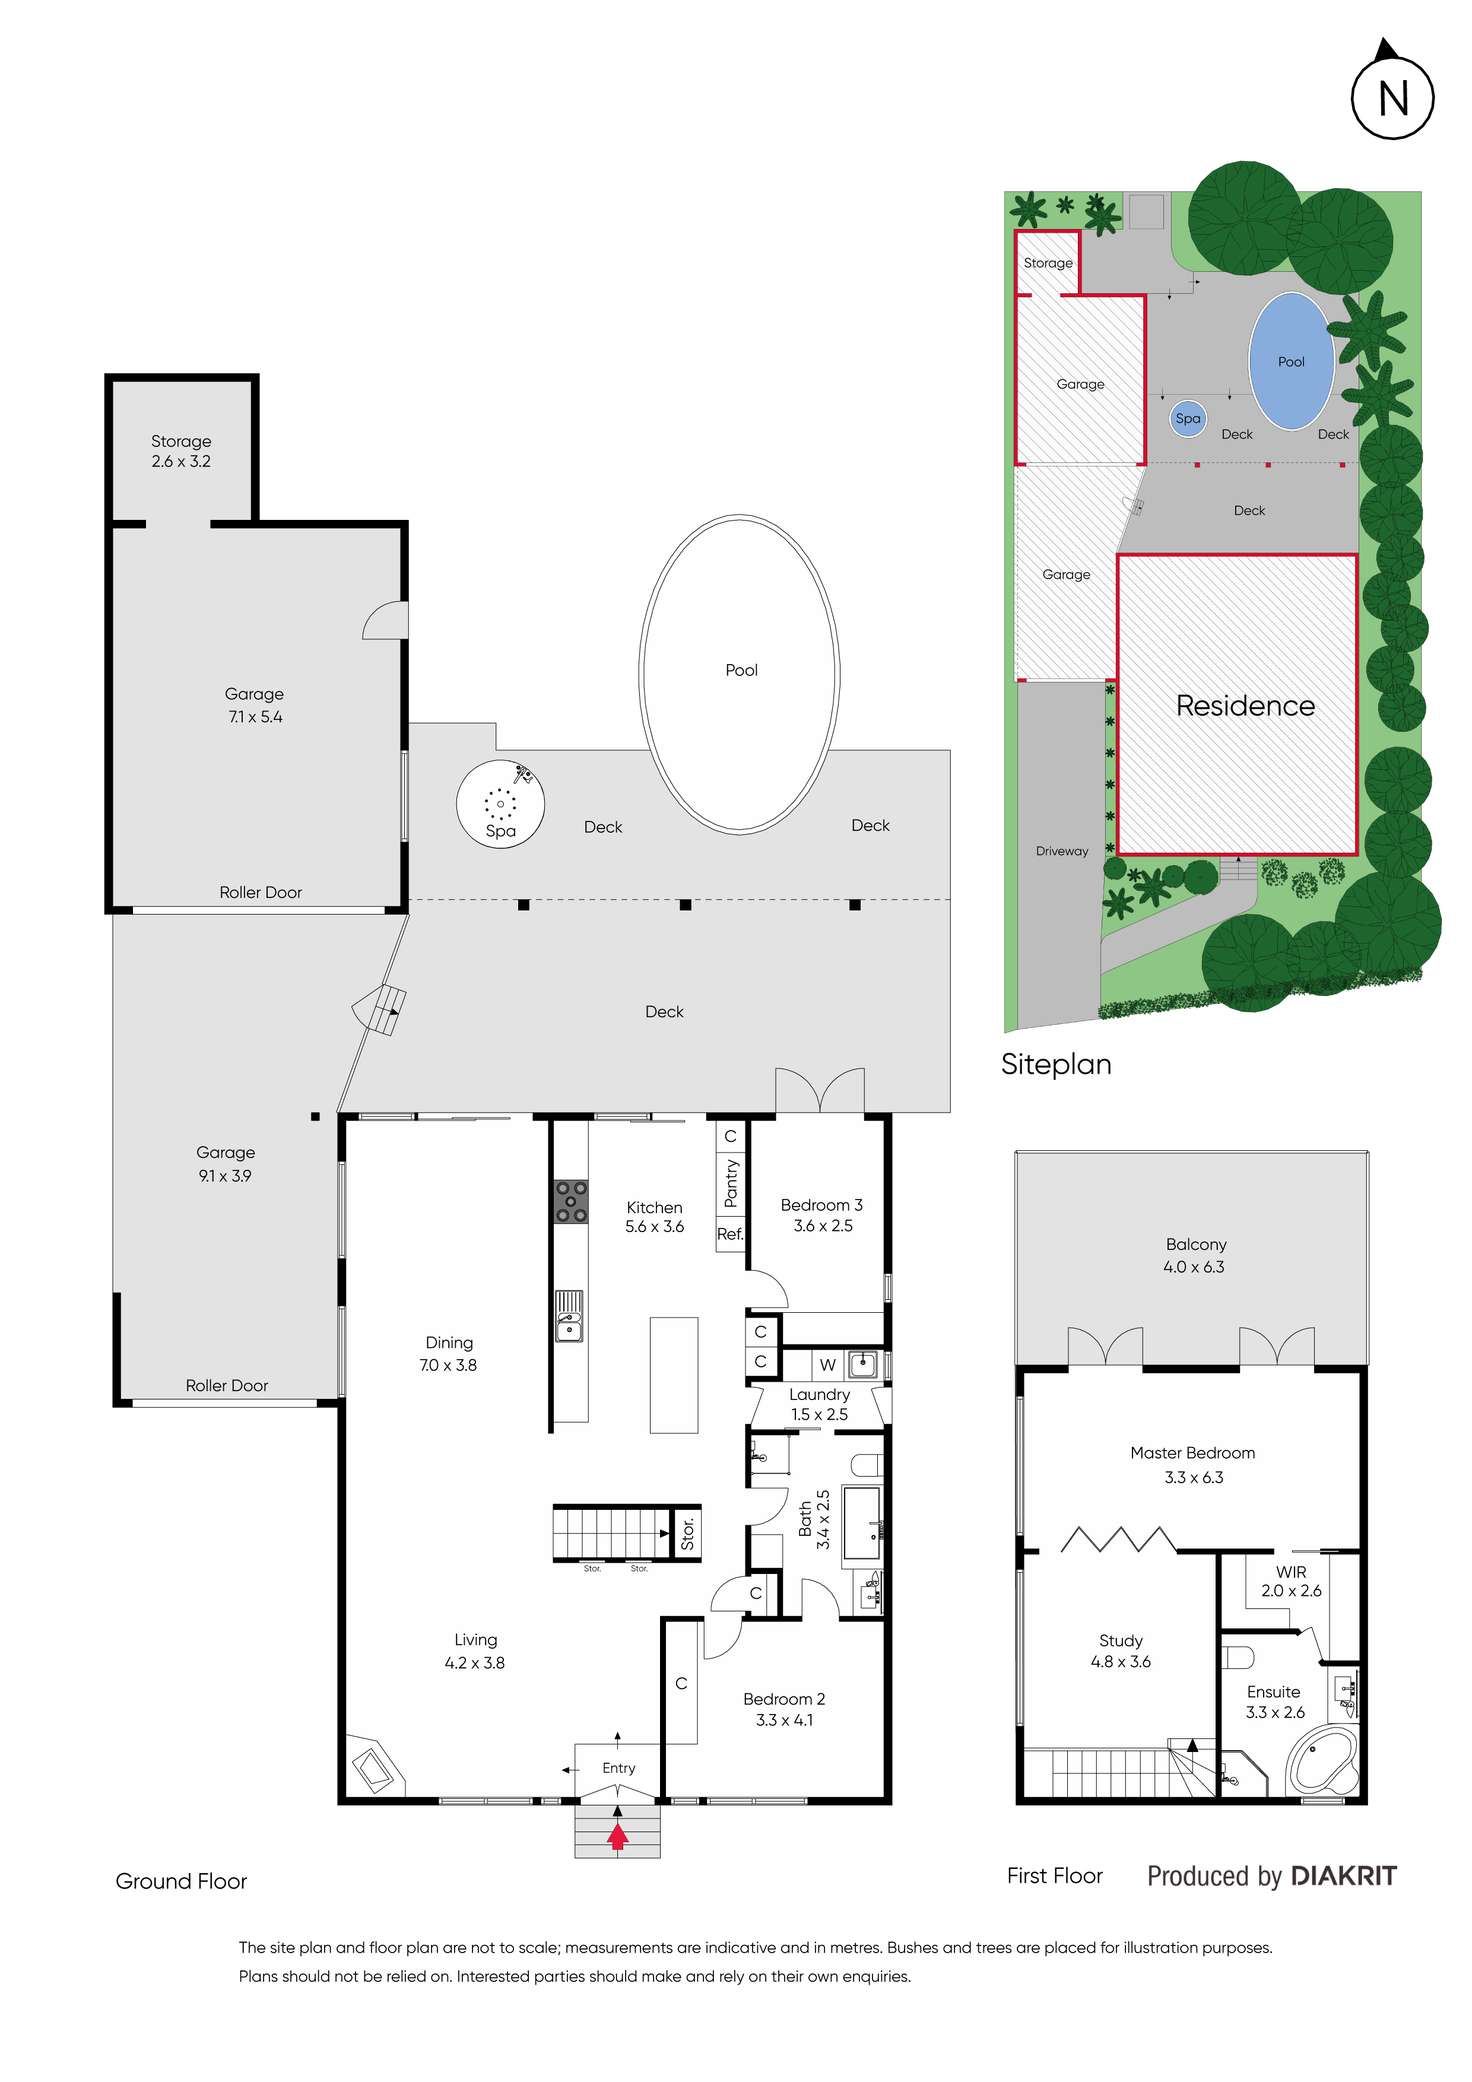 Floorplan of Homely house listing, 85 Wangarra Road, Frankston VIC 3199